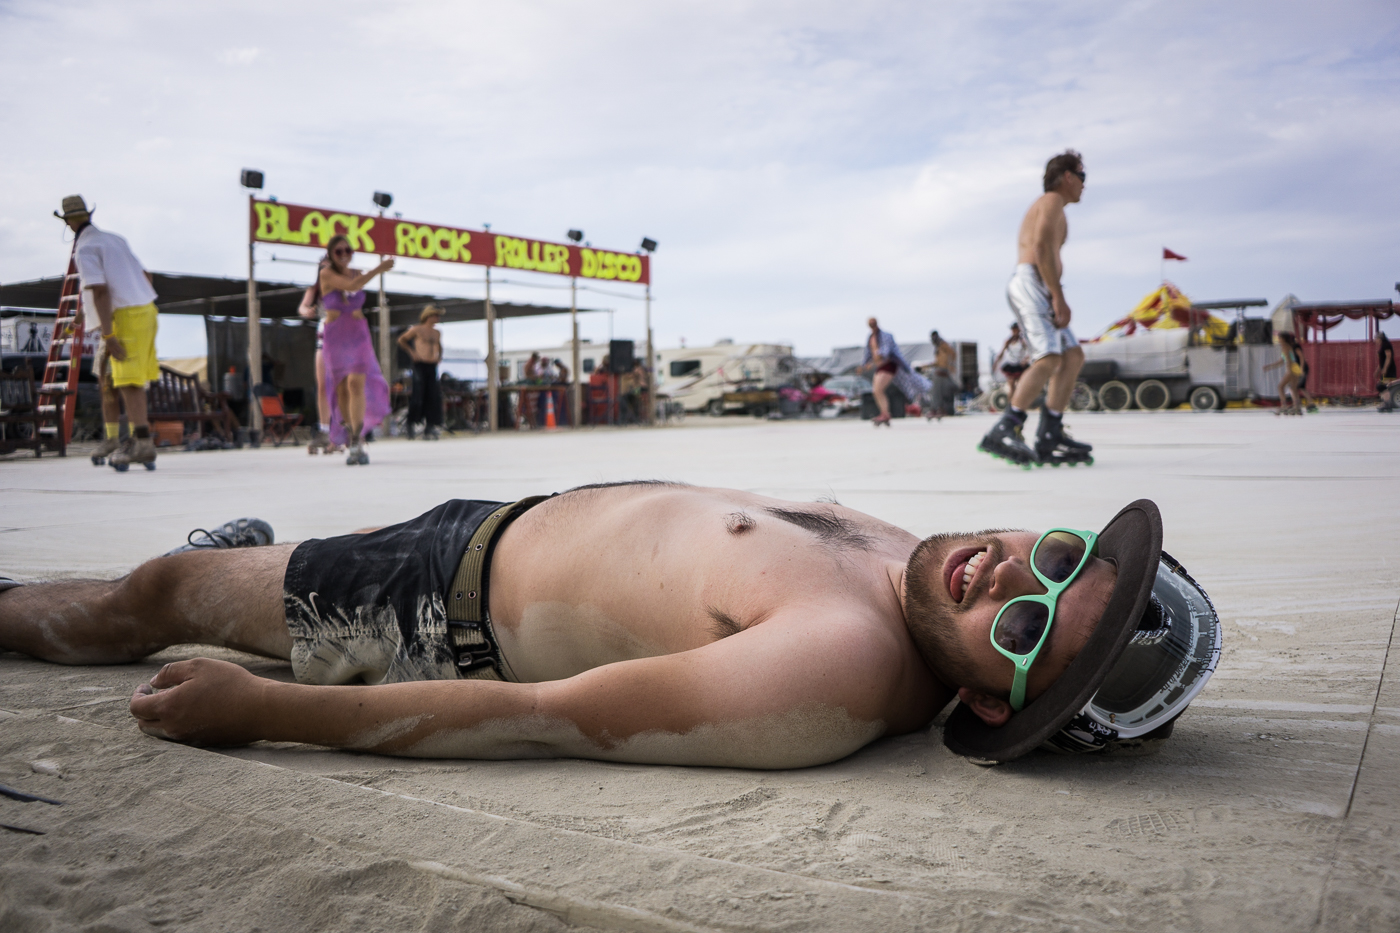 Burning Man 2014: Portraits of a Camp portraits on northtosouth.us